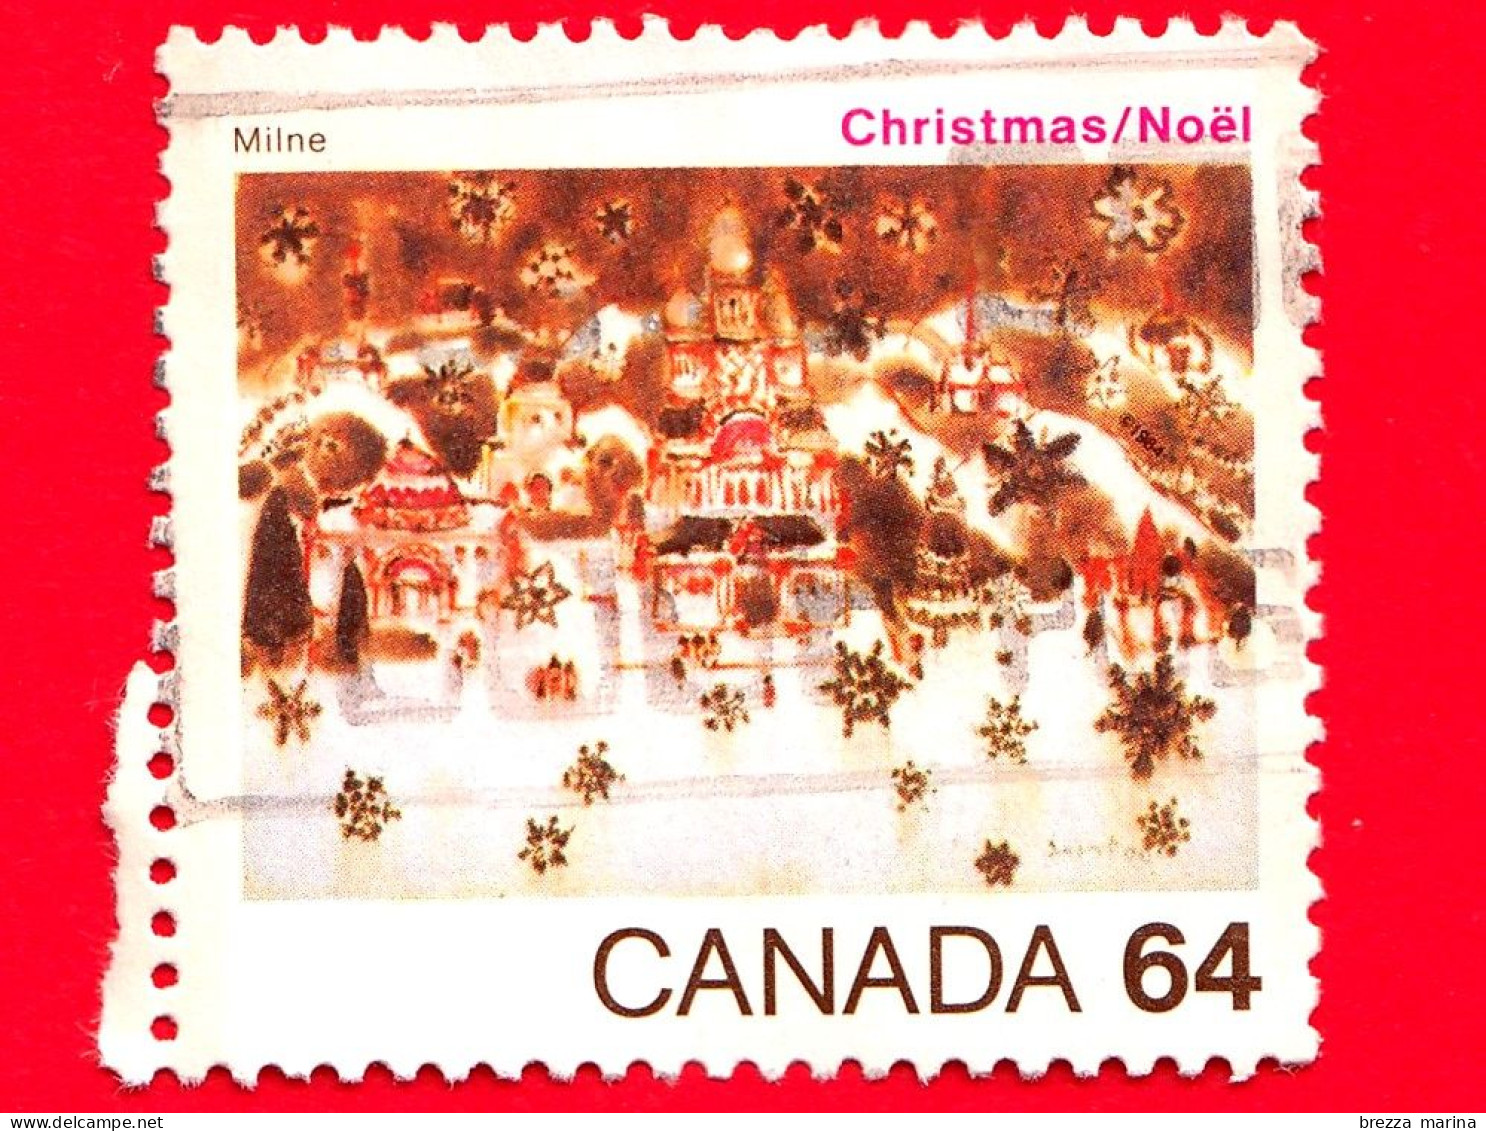 CANADA - Usato - 1984 - Natale - Christmas - Noel - Neve A Betlemme Dipinto Di David Milne - 64 - Usados